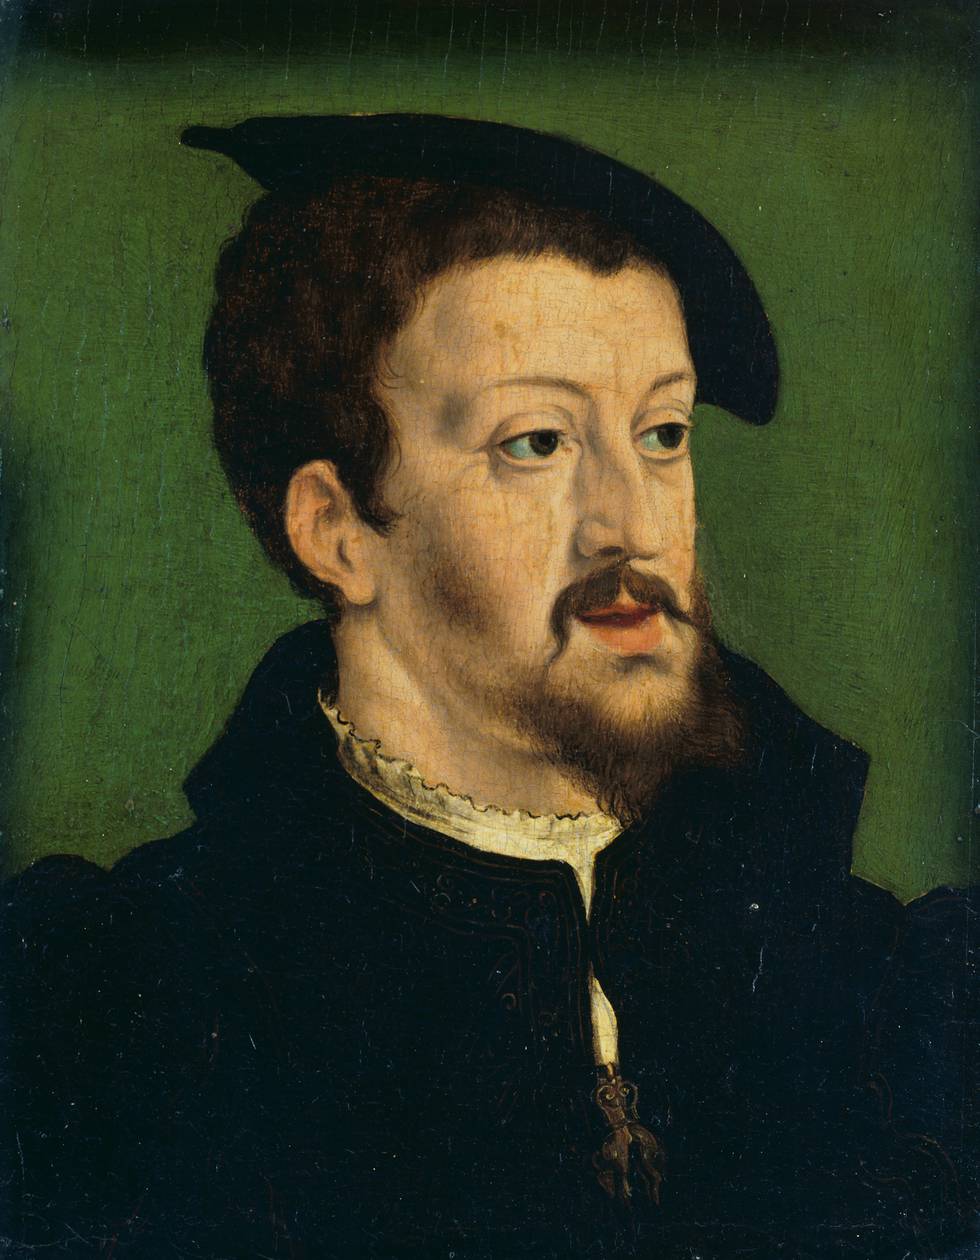 Sixteenth-century portrait of a bearded man dressed in black